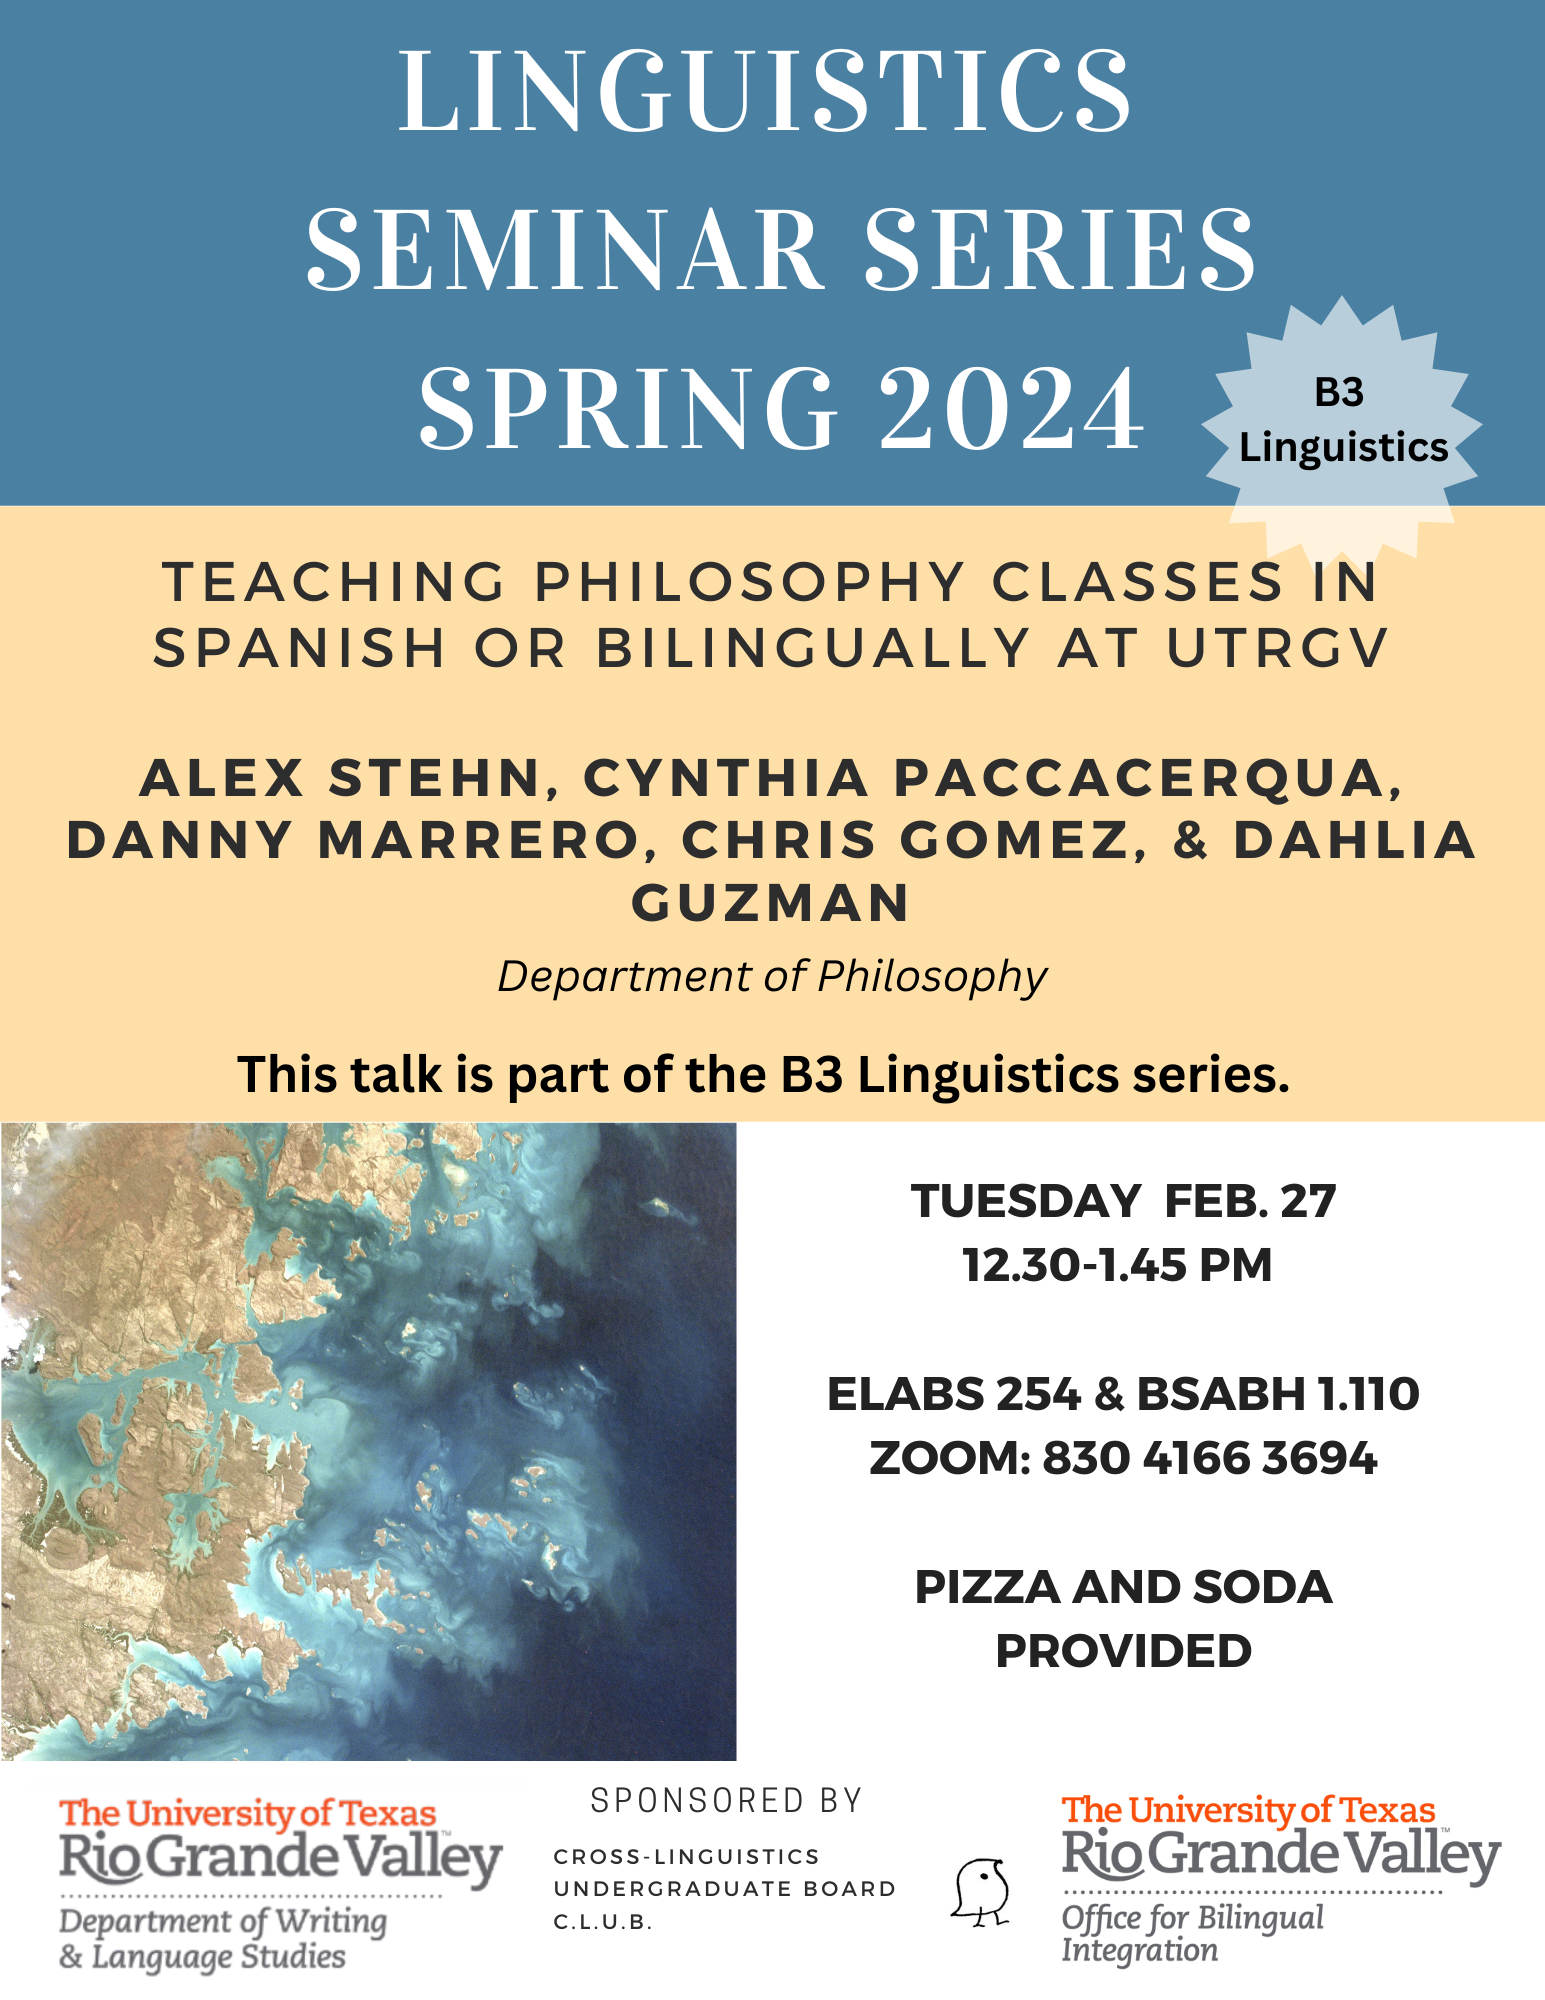 The B3 Linguistics Seminar Series presents “Teaching Philosophy Classes in Spanish or Bilingually at UTRGV!"